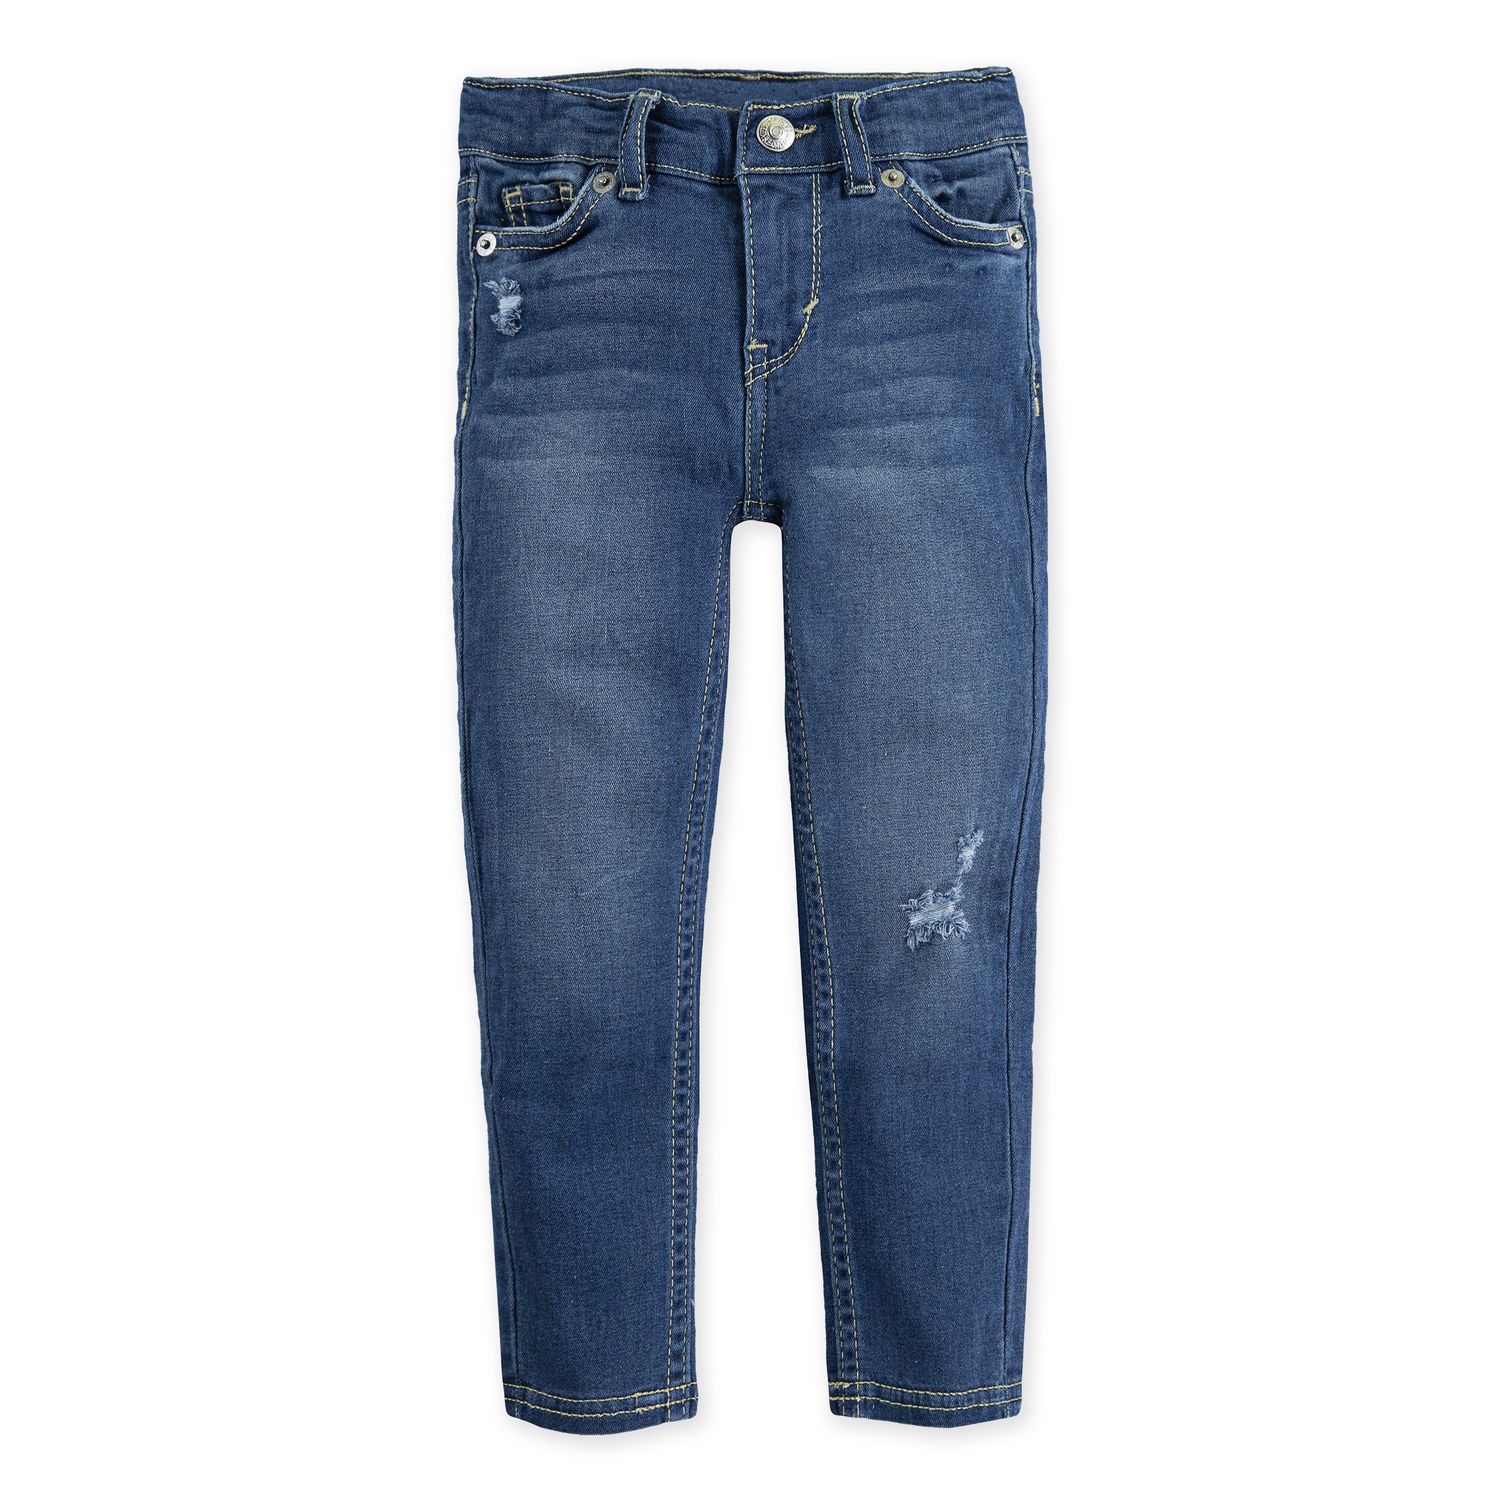 levi's jeans 710 super skinny